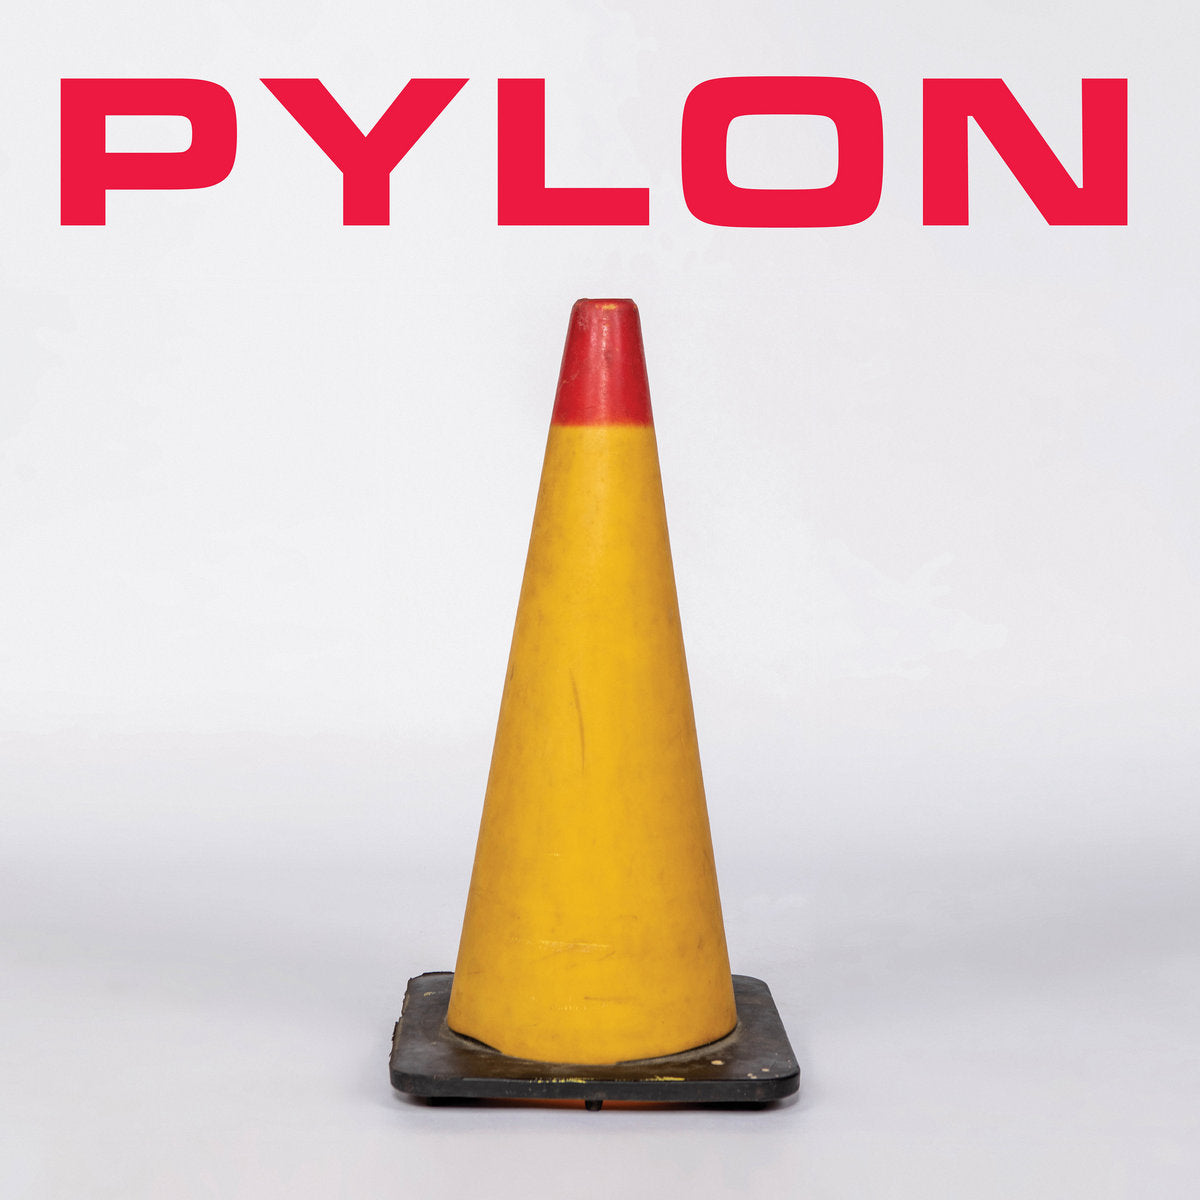 PYLON - Pylon Box - 4CD - Boxset